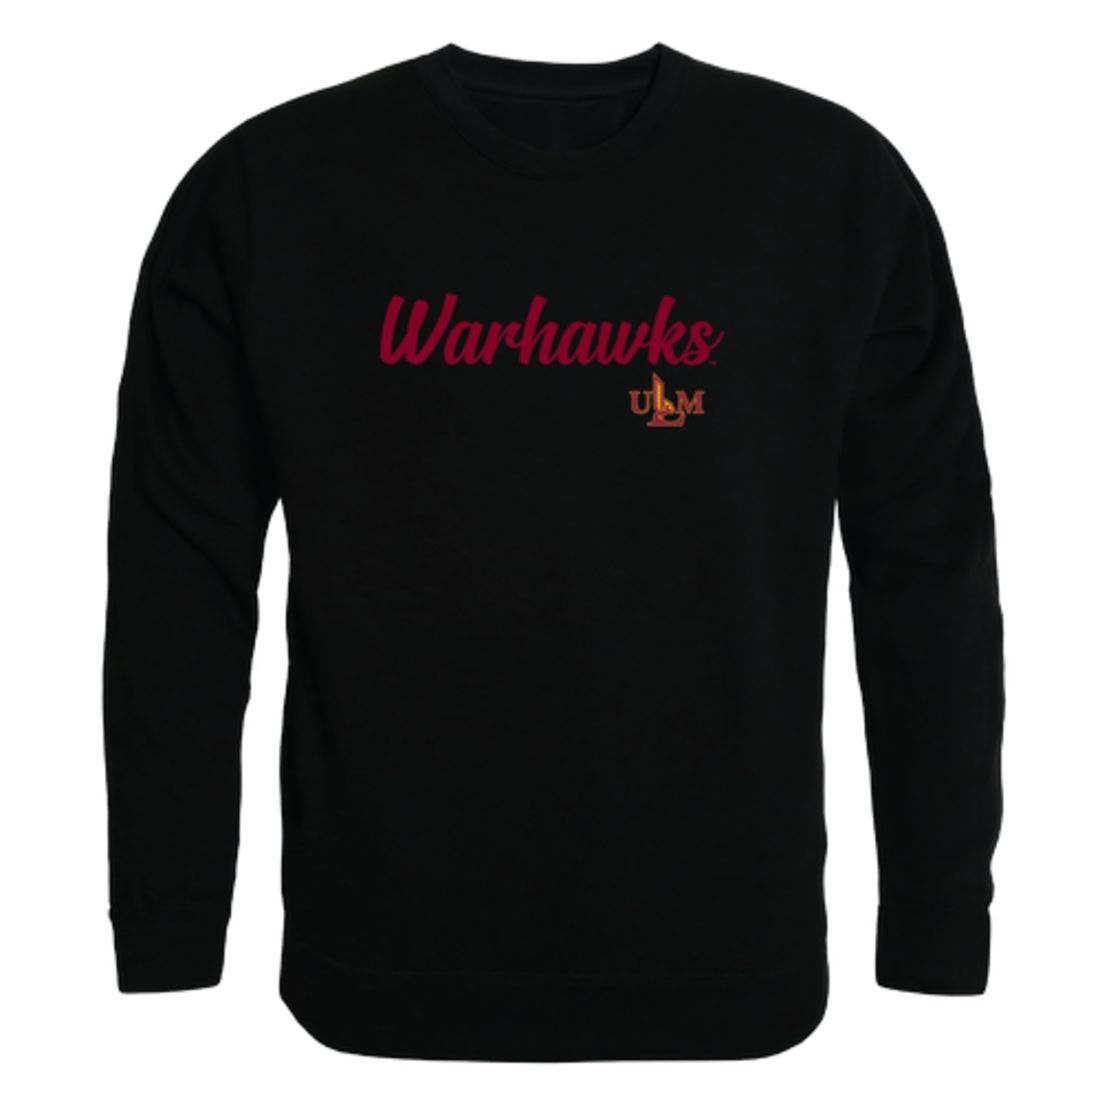 ULM University of Louisiana Monroe Warhawks Script Crewneck Pullover Sweatshirt Sweater Black-Campus-Wardrobe